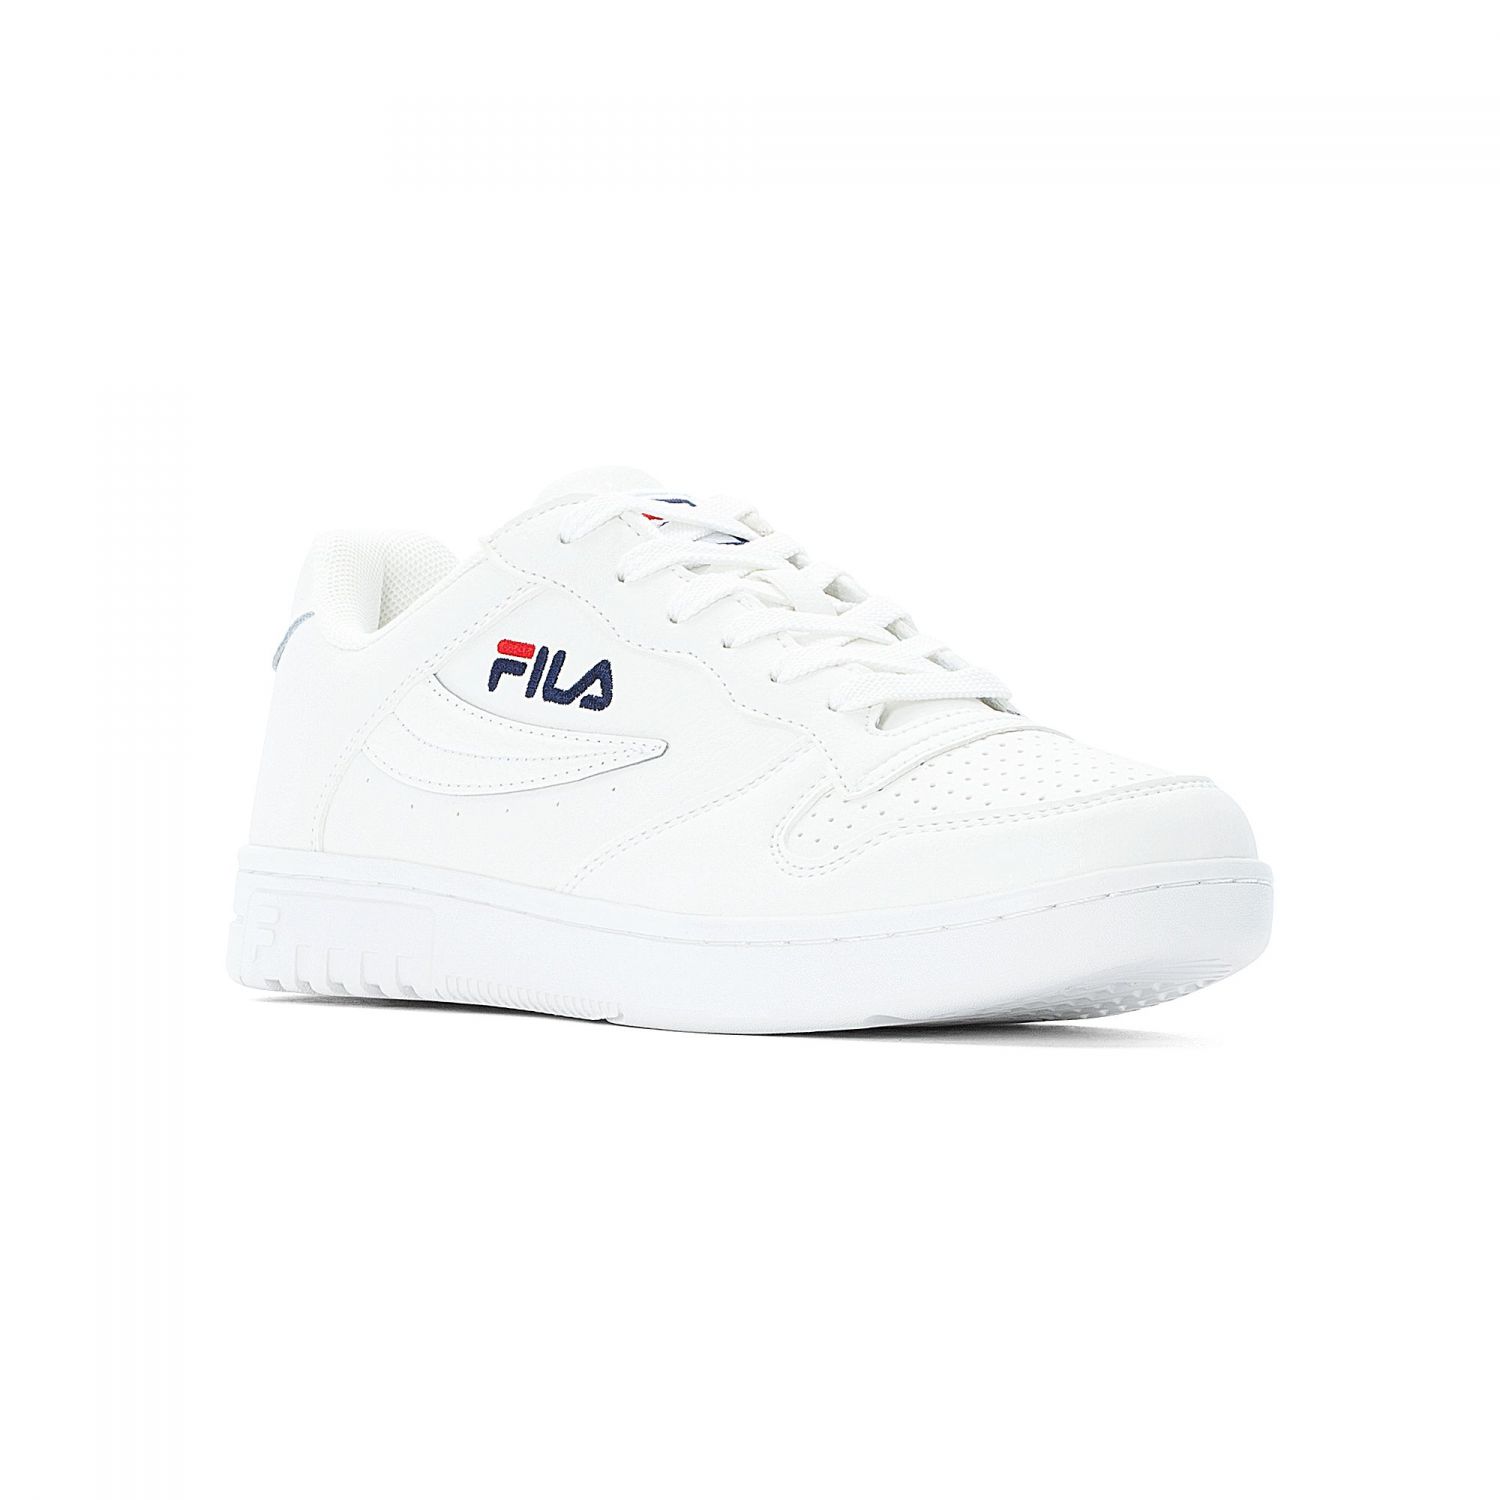 Fila FX 100 Low Wmn white - white | FILA Official